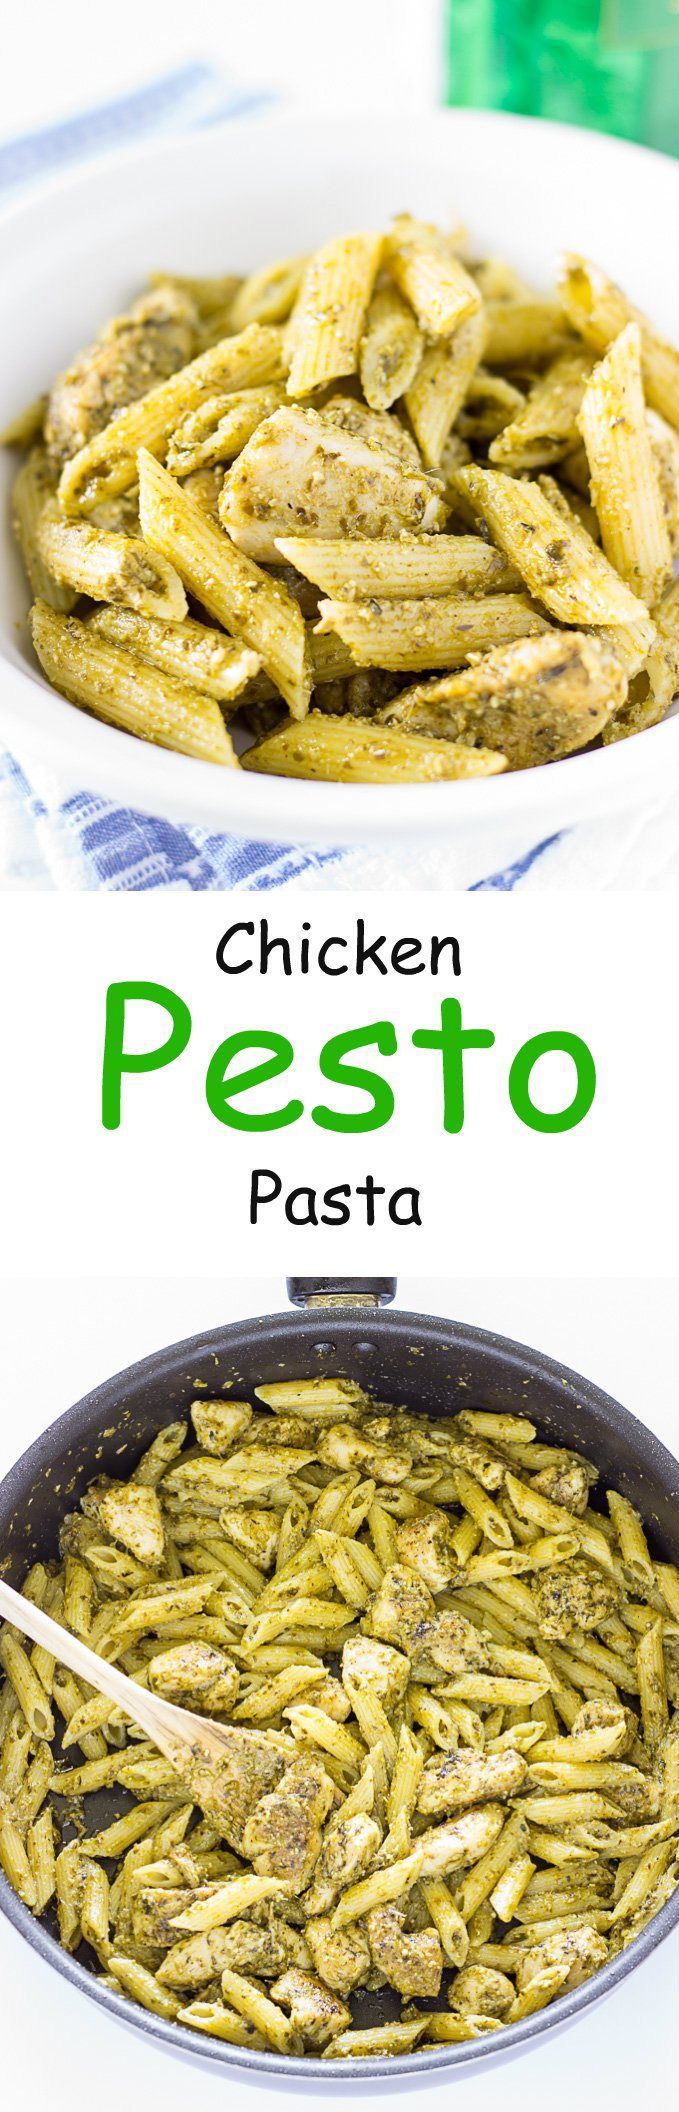 Chicken Pesto Pasta – Chicken and penne pasta in a basil pesto sauce.  Ready in under 20 minutes!